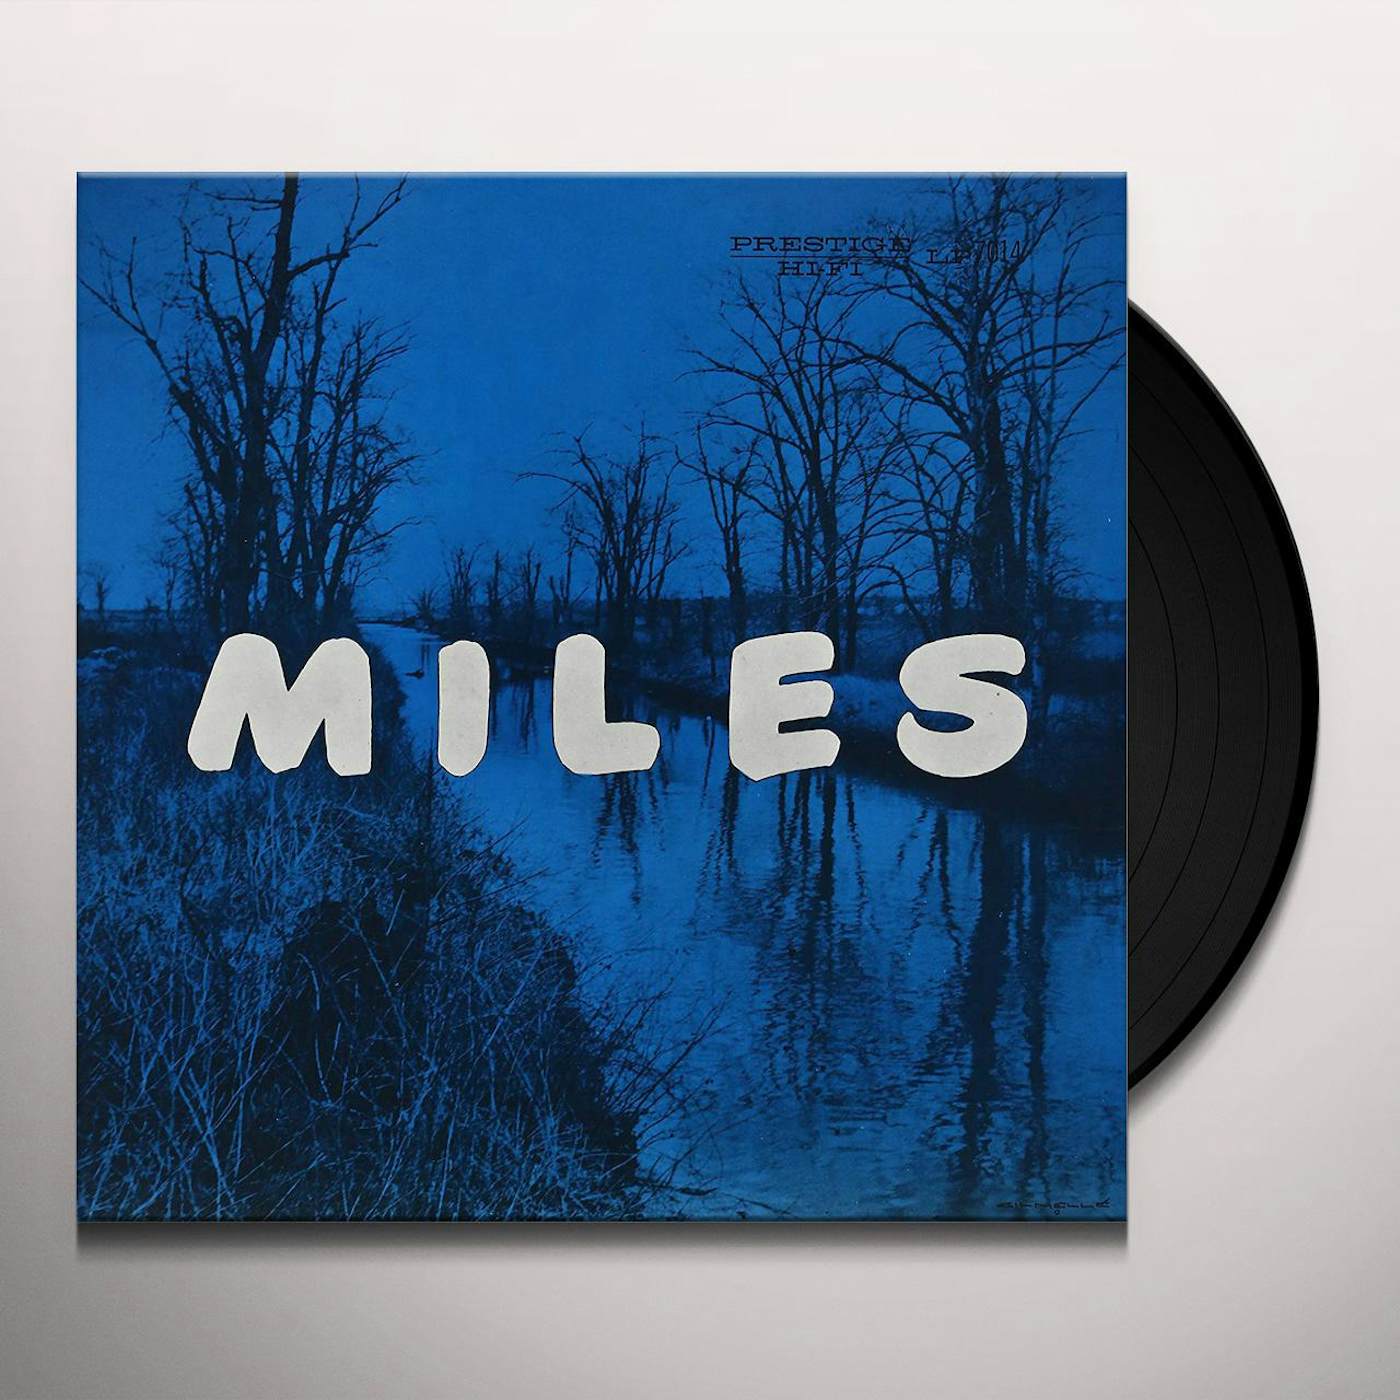 NEW MILES DAVIS QUINTET Vinyl Record